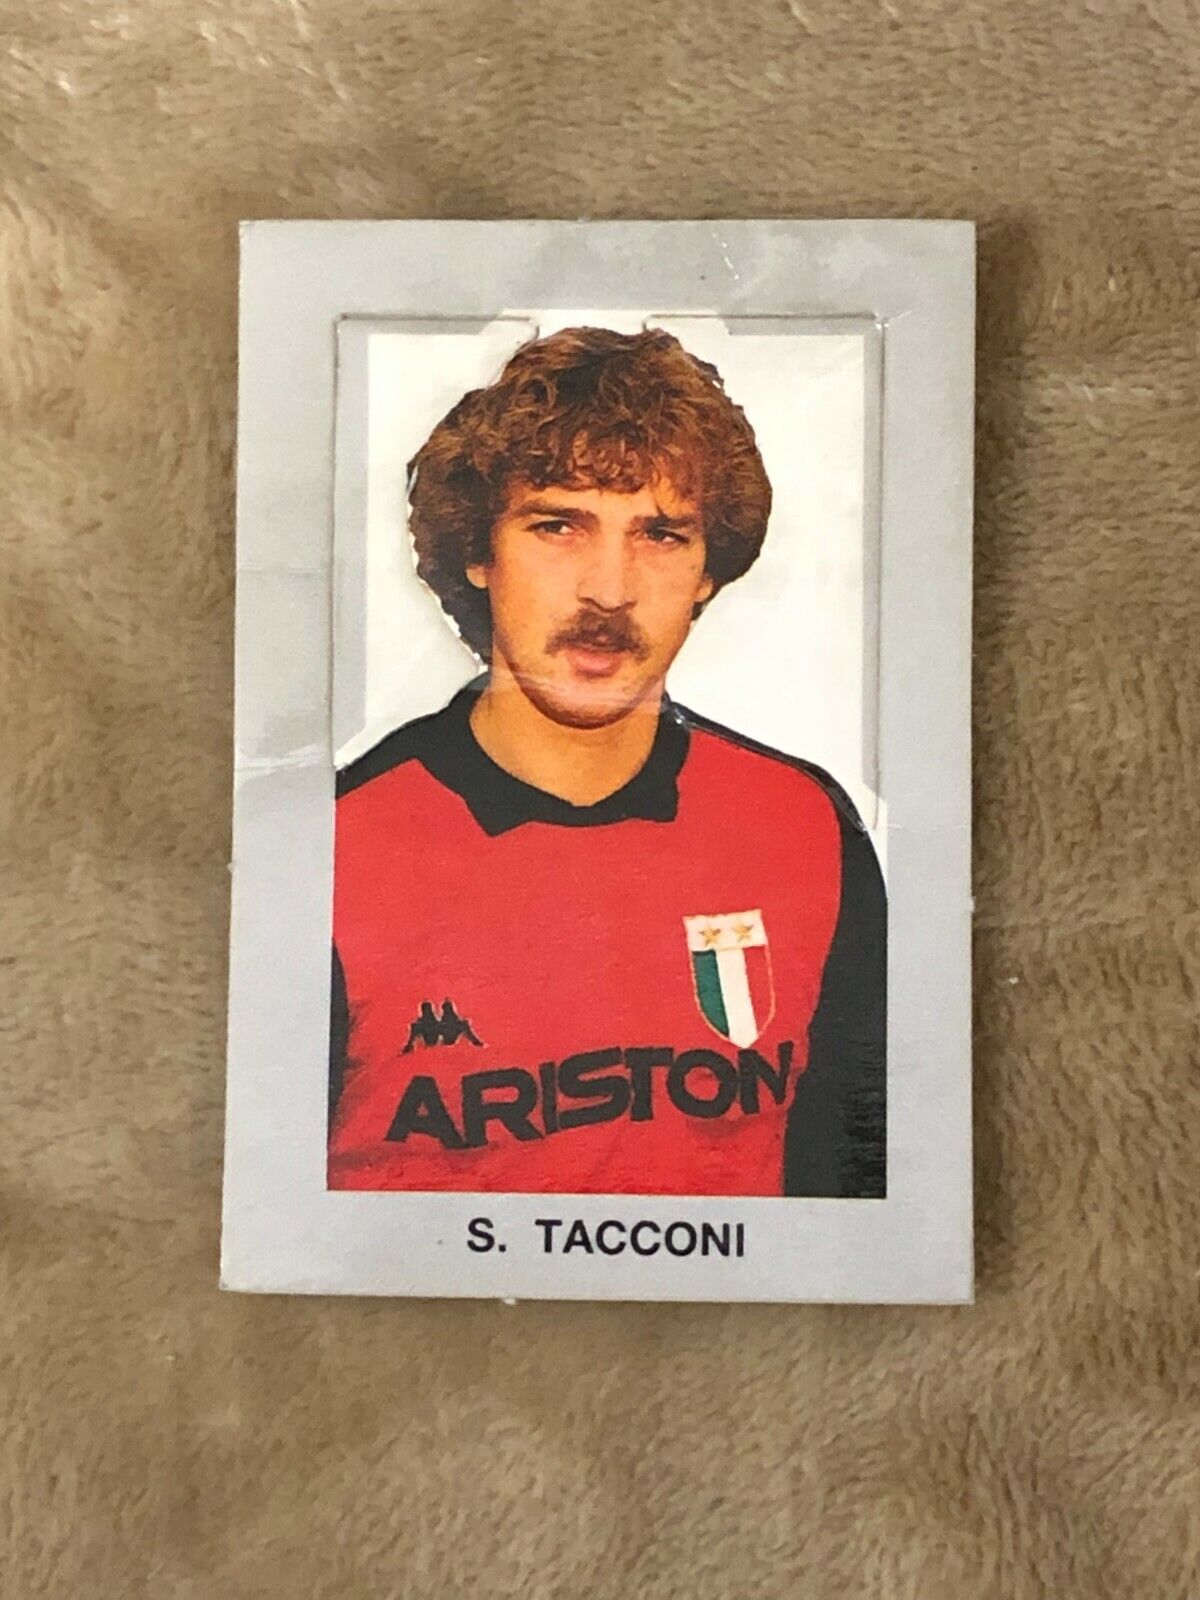 Figurina fustellata S. Tacconi Juventus sorpresa patatine anni 80 di Aa.vv.,  19